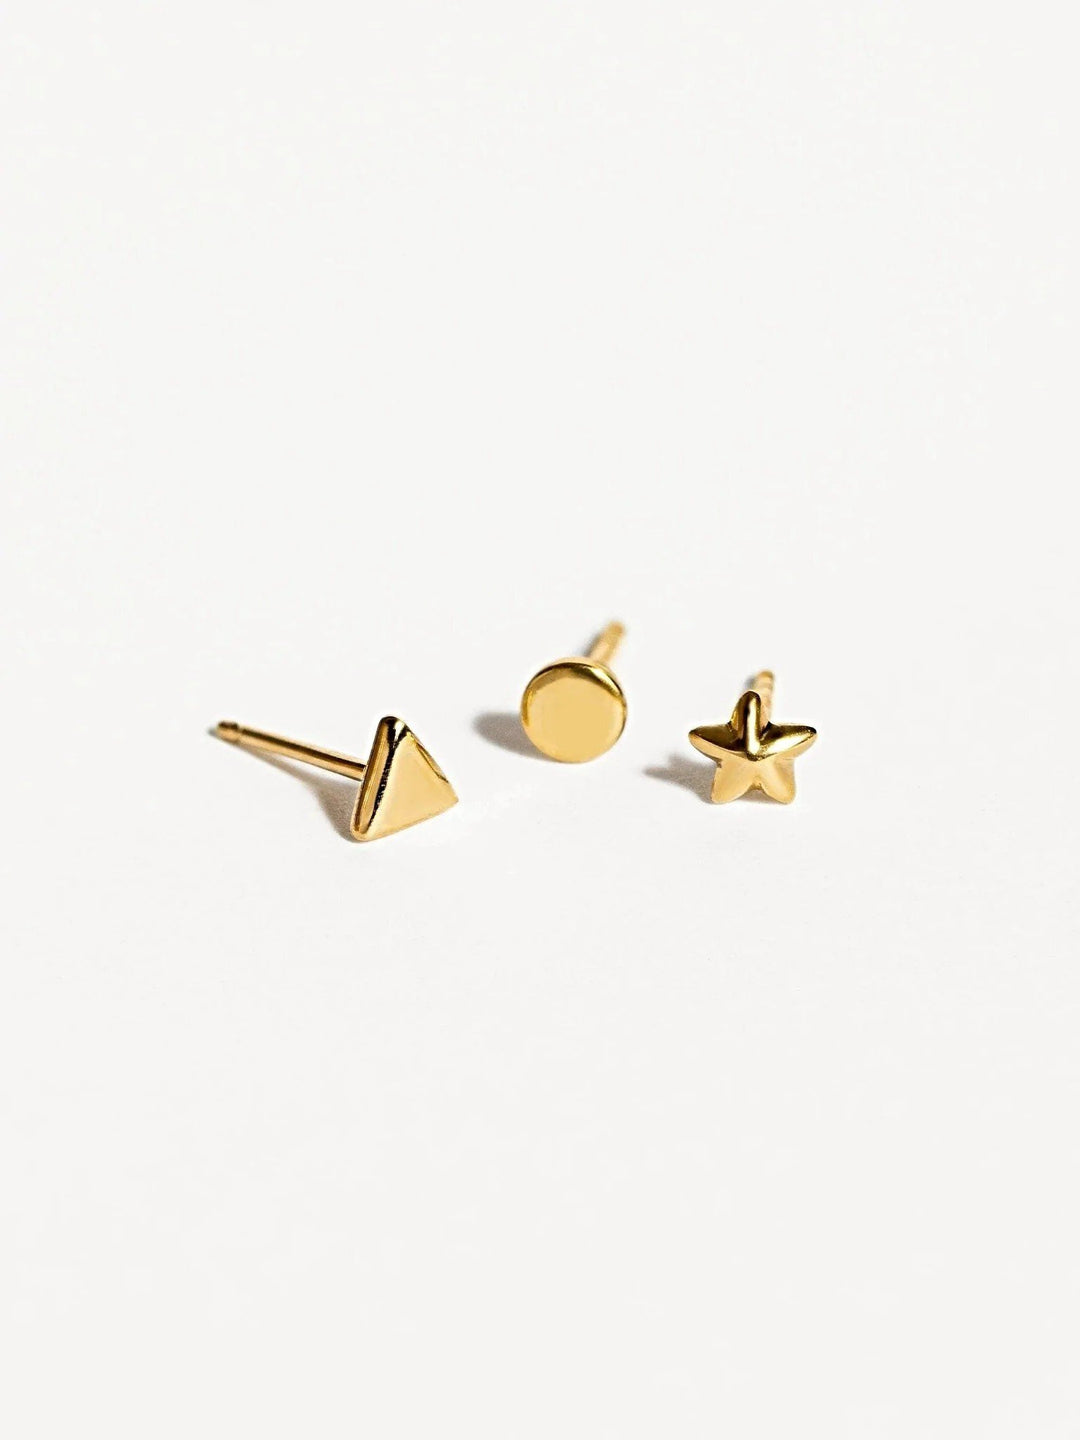 Peg Geometric Earring Set - 24K Gold PlatedBackUpItemsCartilage EarringsLunai Jewelry